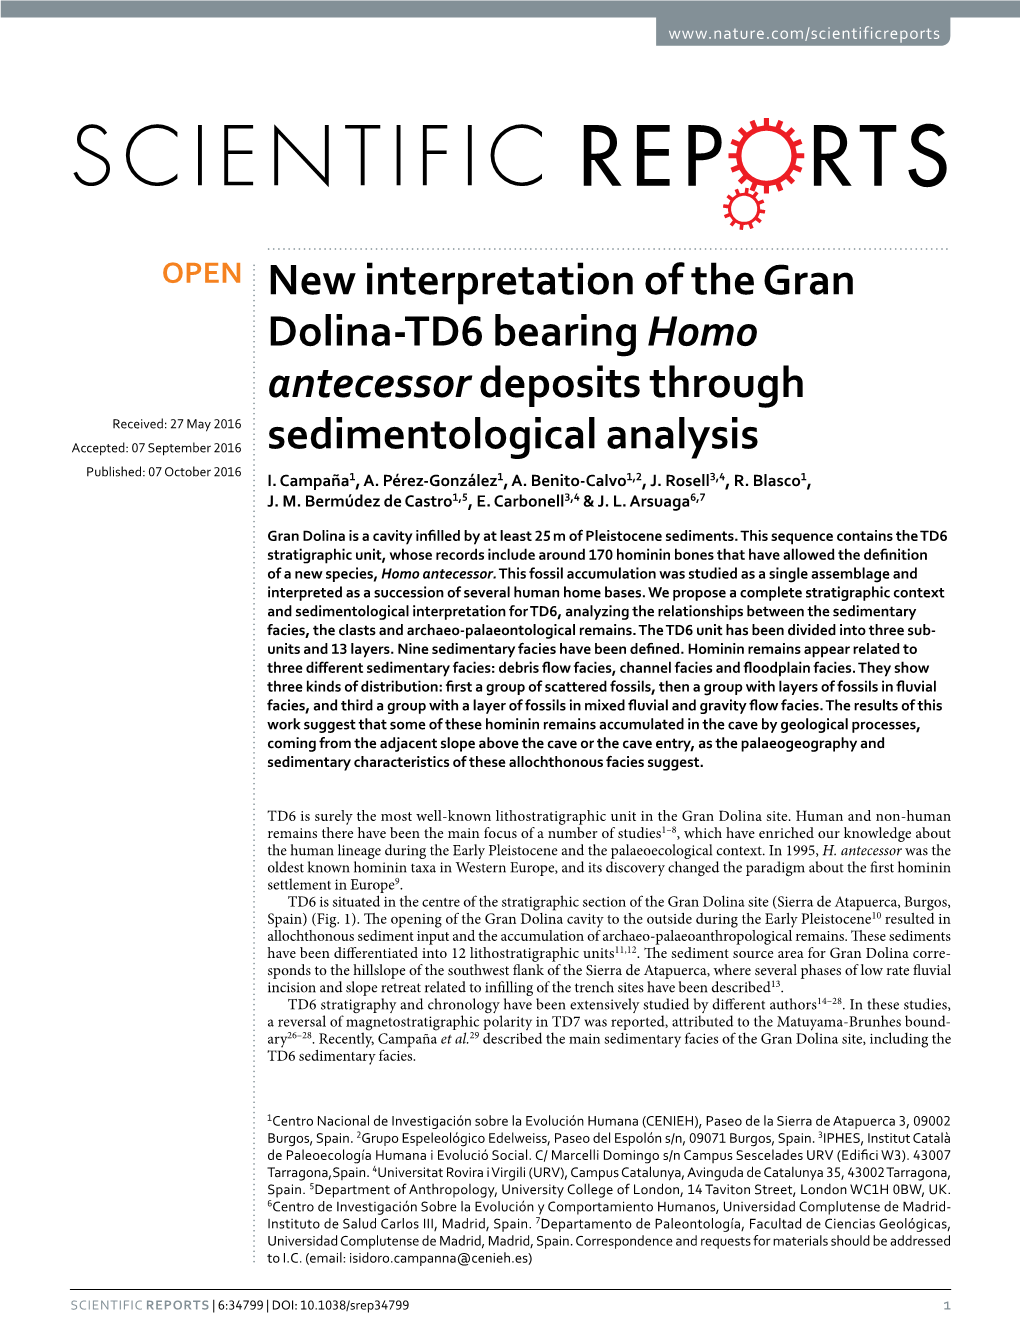 New Interpretation of the Gran Dolina-TD6 Bearing Homo